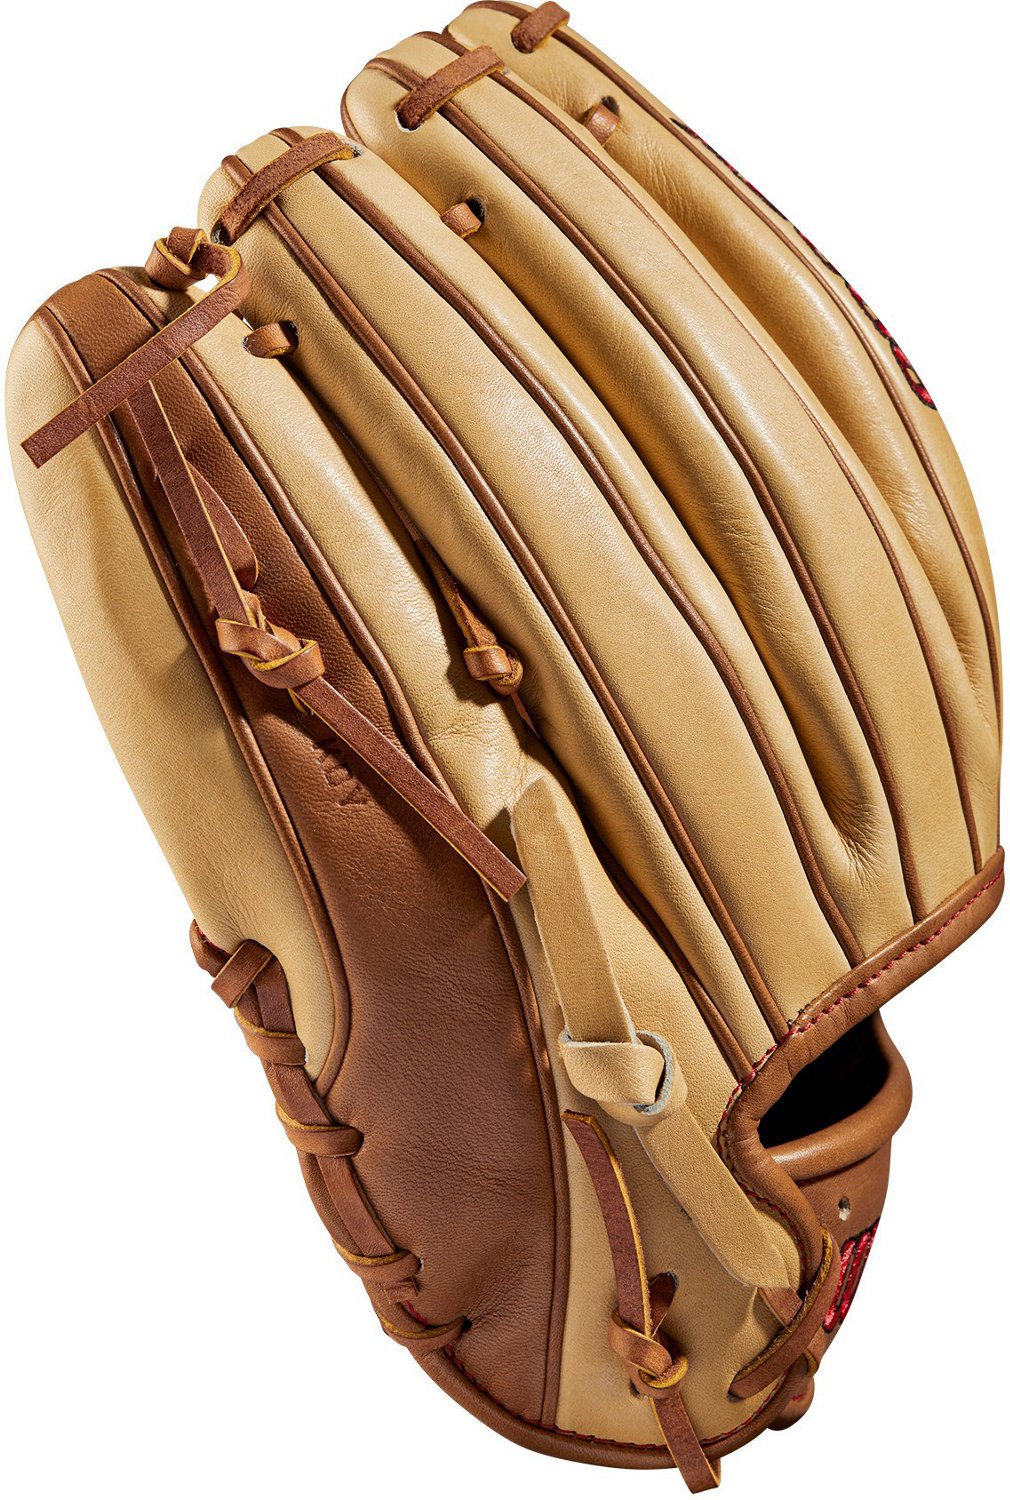 Wilson A2000 1786 11.5 Baseball Glove (WBW100390115)